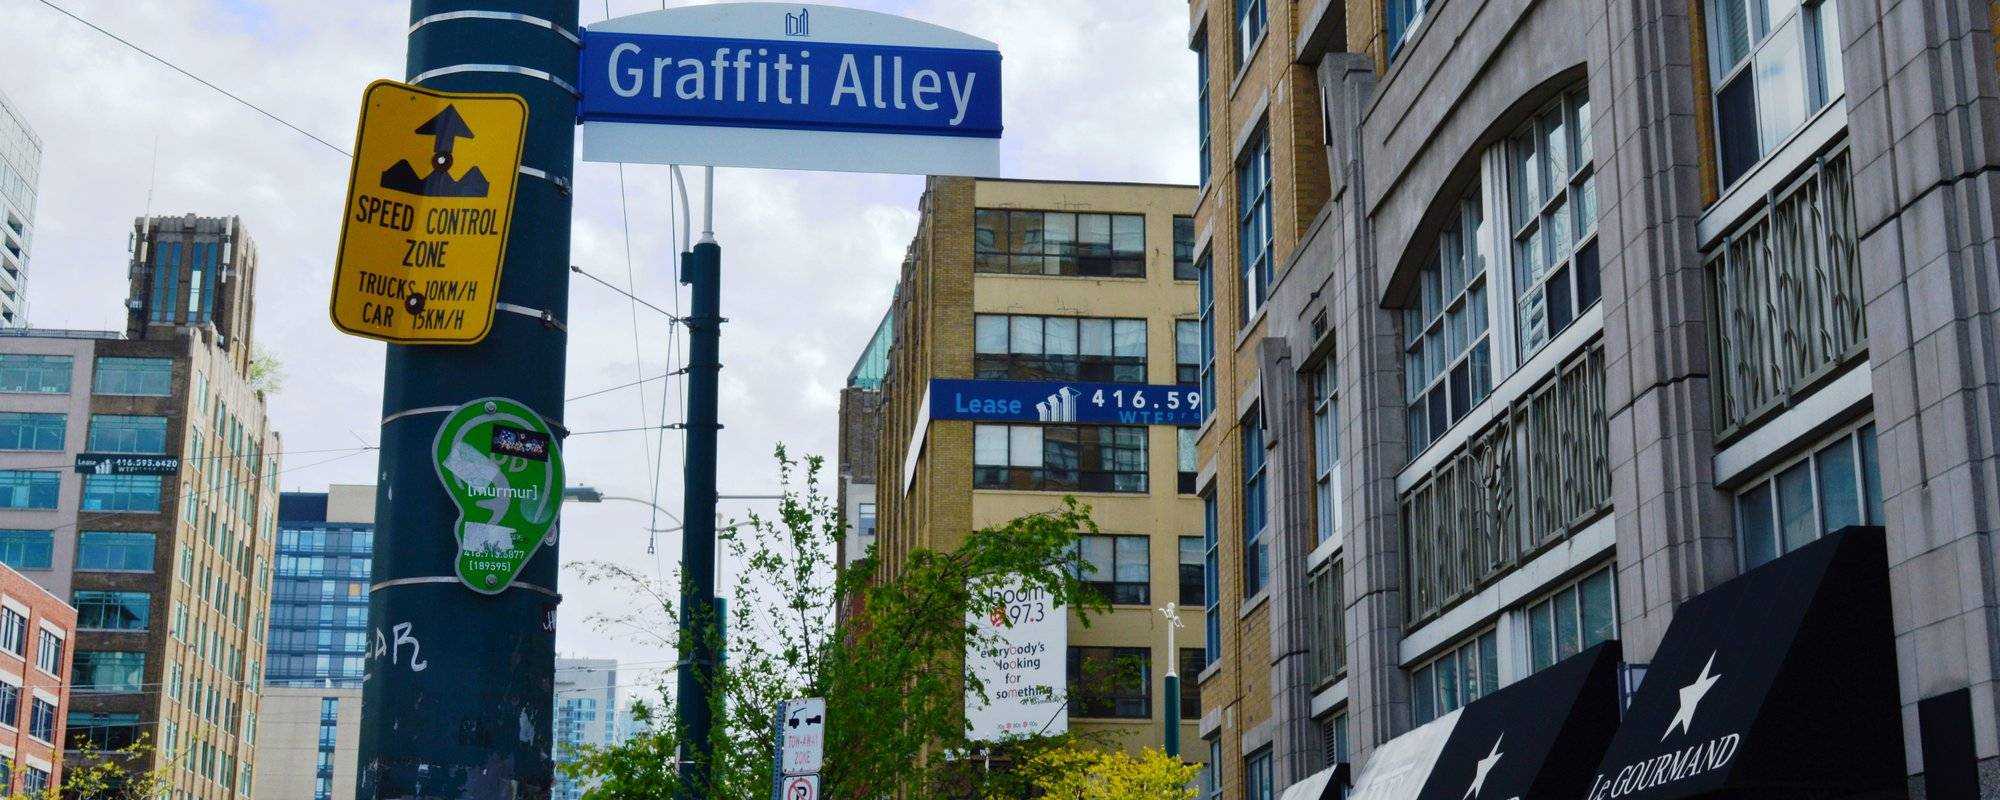 A walk through Toronto’s Graffiti Alley